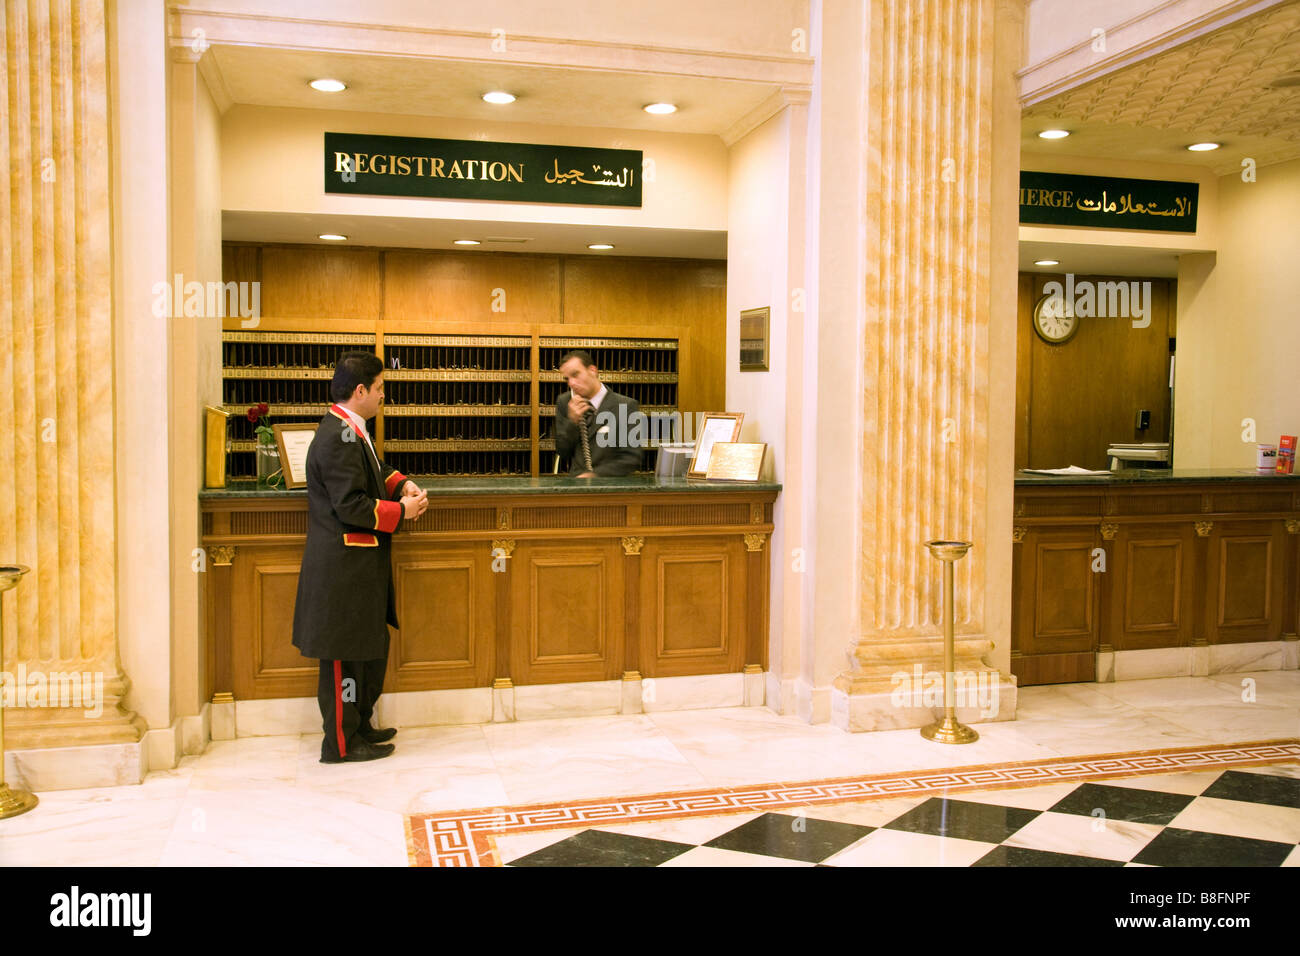 Träger am Hotel an der Rezeption, das Regency Palace Hotel Amman, Jordanien, Naher Osten Stockfoto